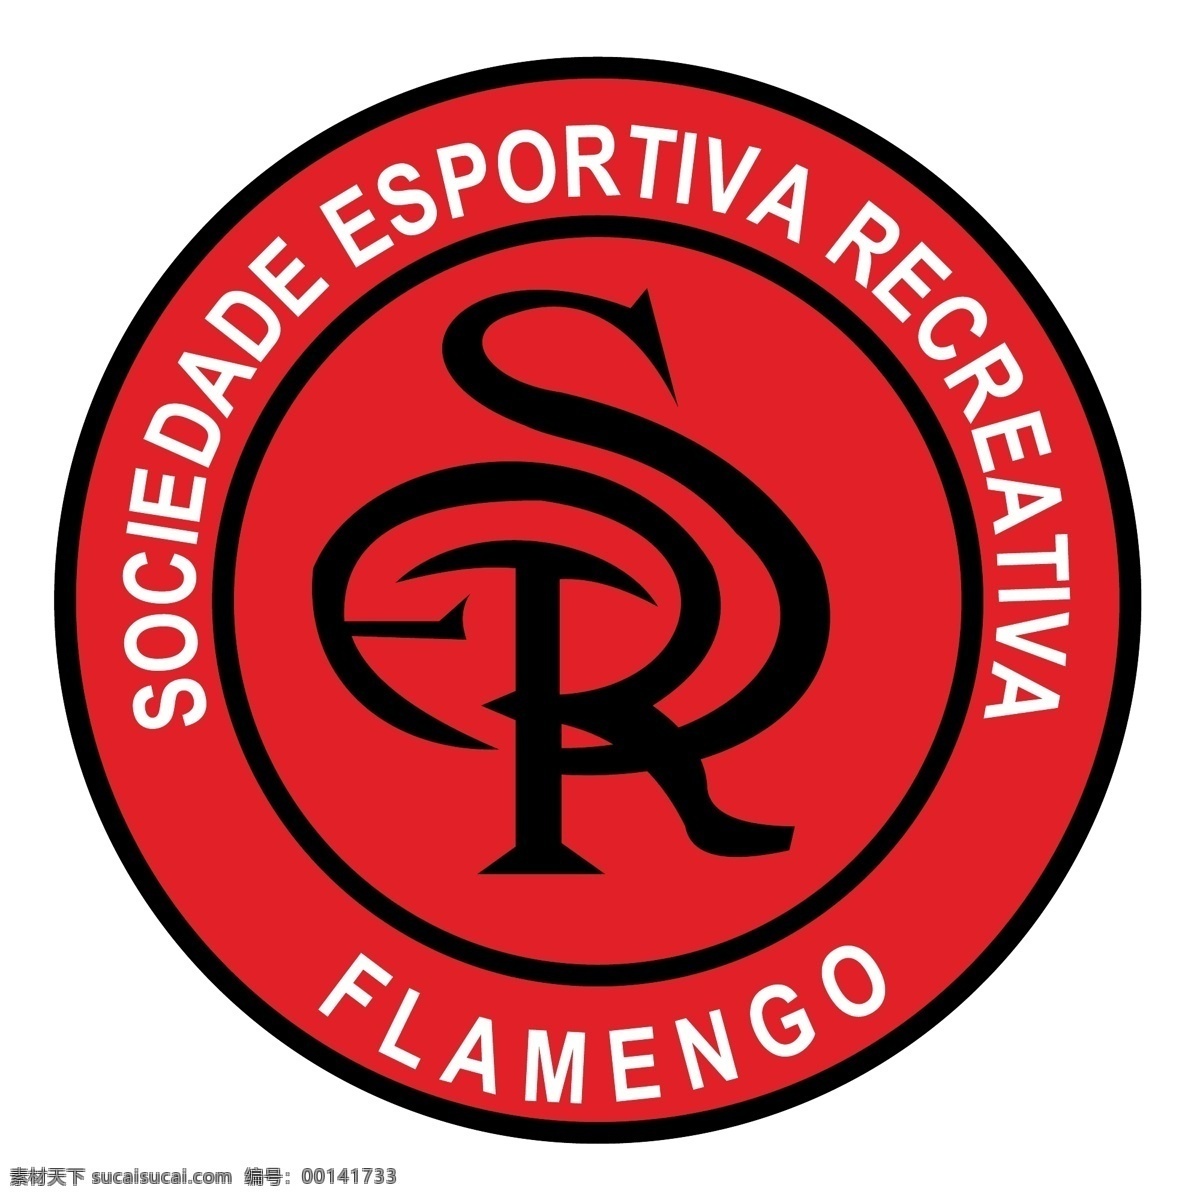 esportiva 电子 股份 有限公司 recreativa 弗拉门戈 弗洛雷斯 大库 尼亚 rs 自由电子 标志 e 自由 psd源文件 logo设计